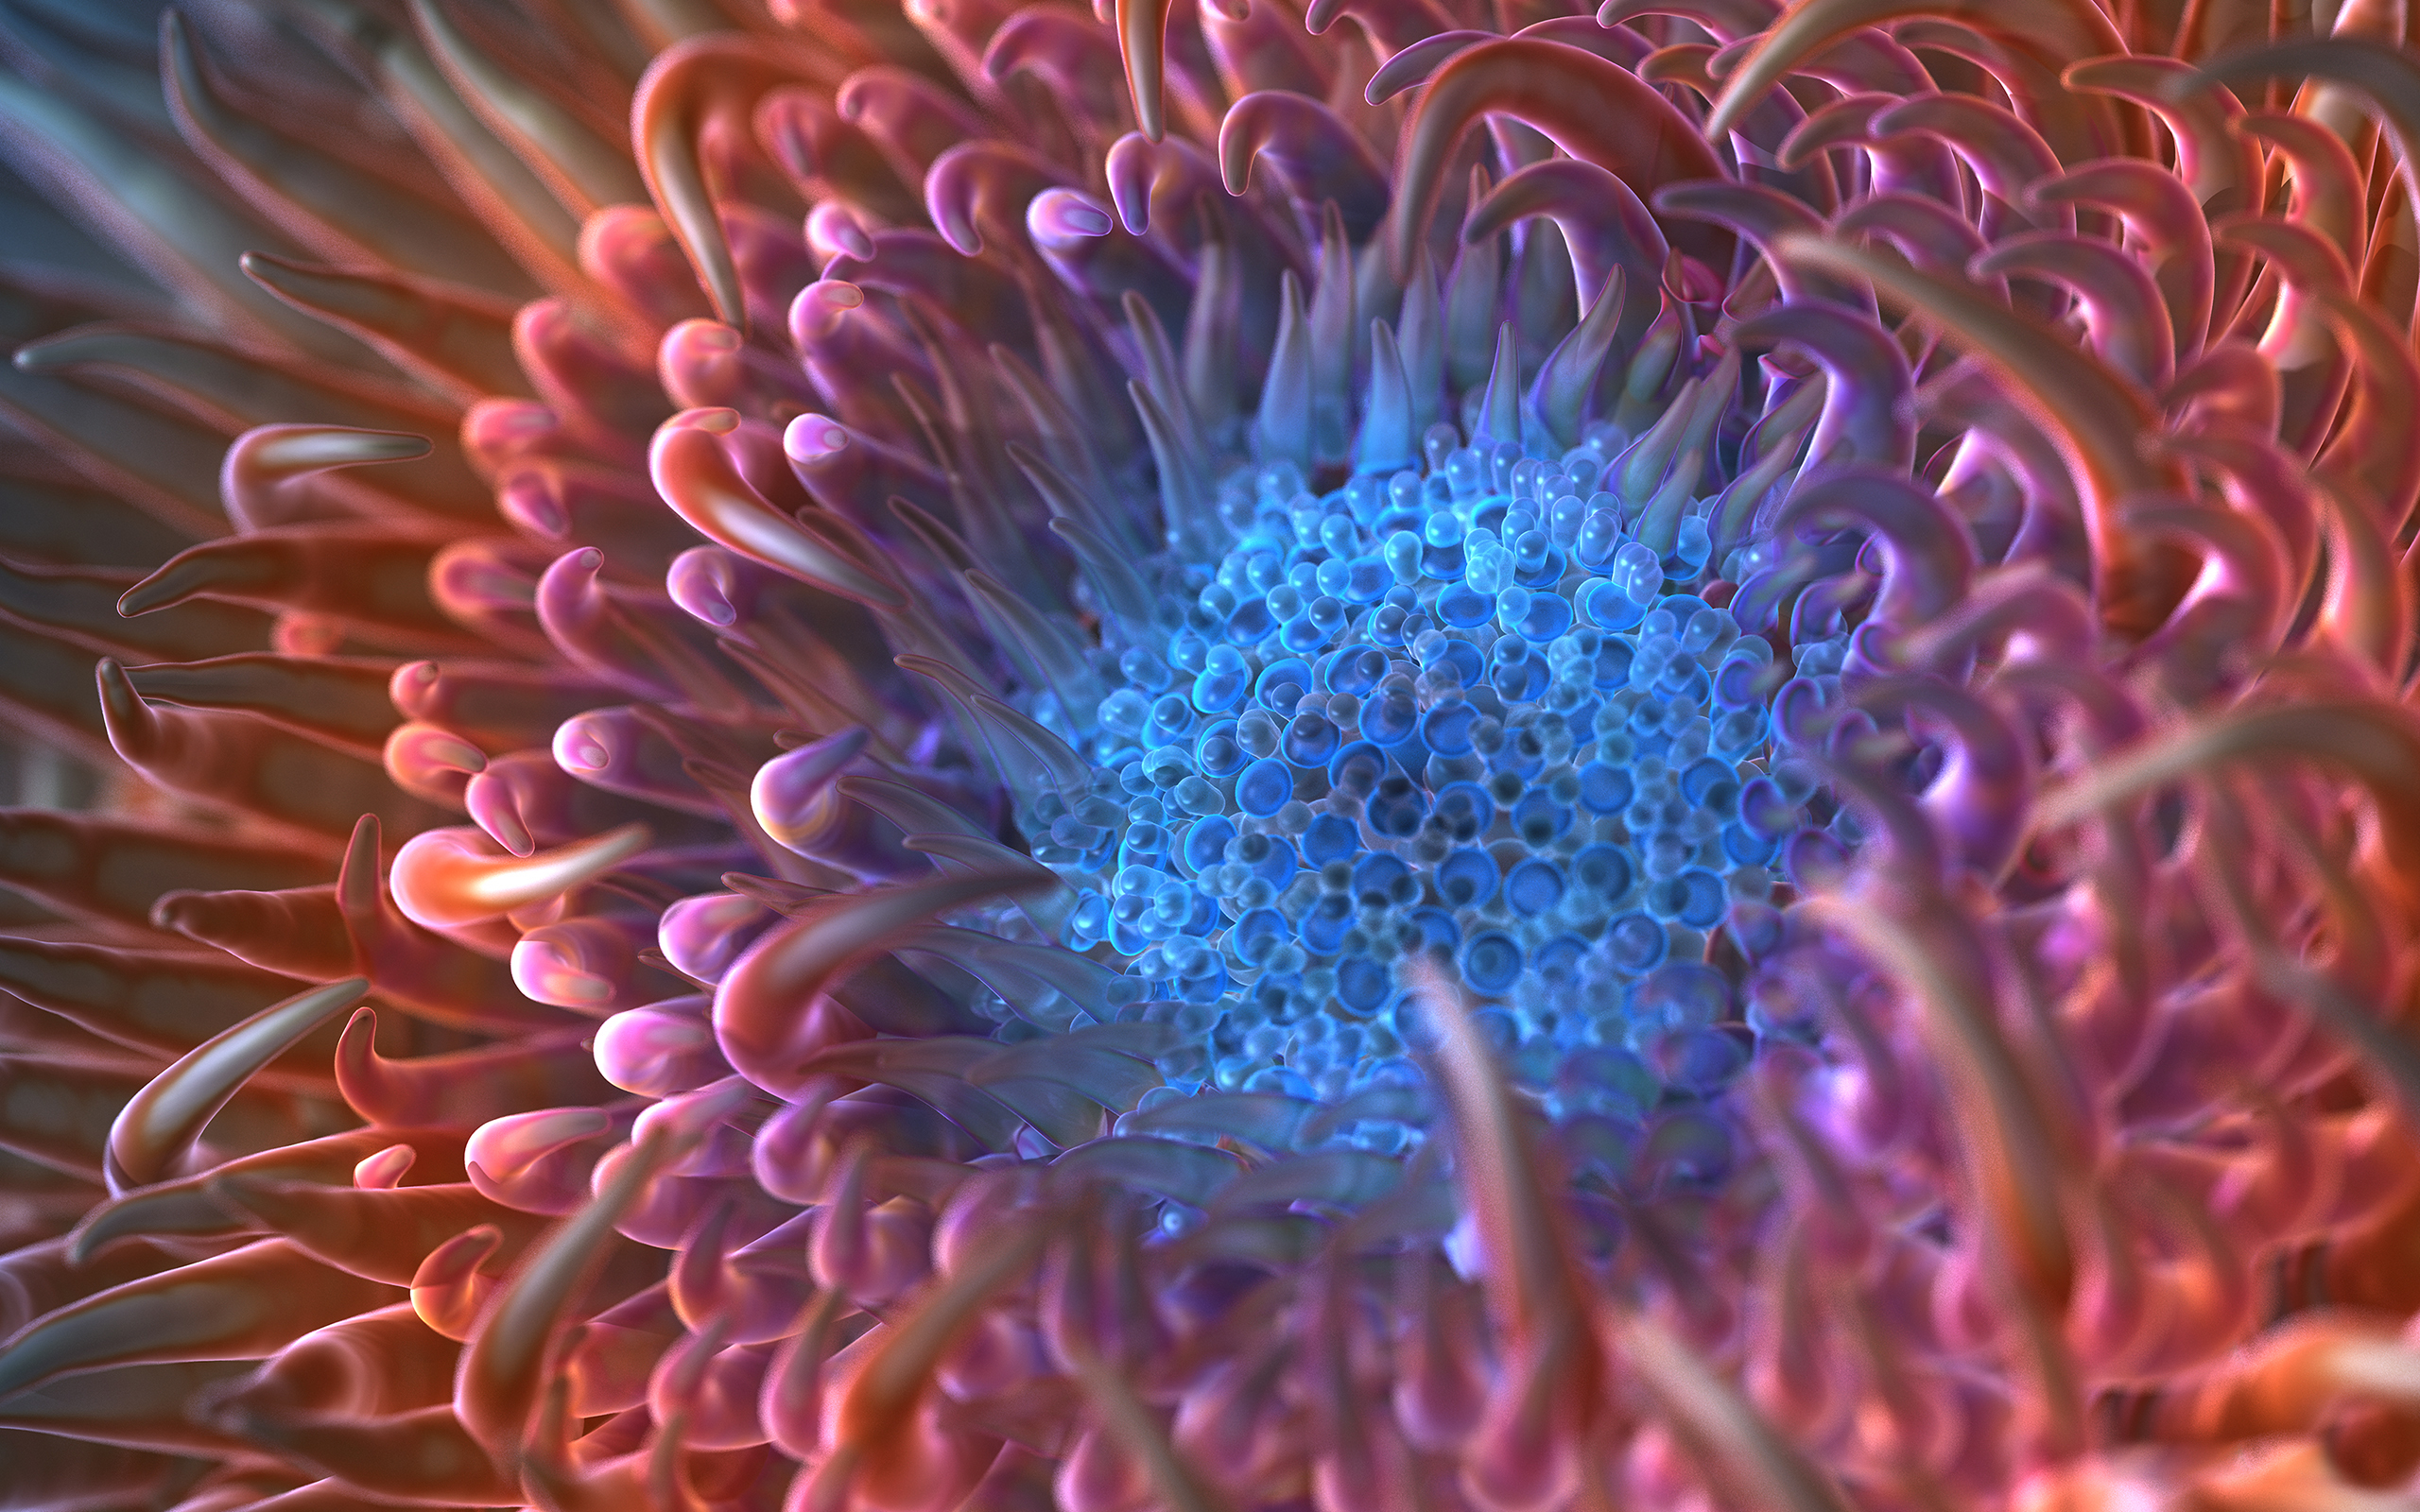 Digital Anemone Flower Wallpapers - HD Wallpapers 103544